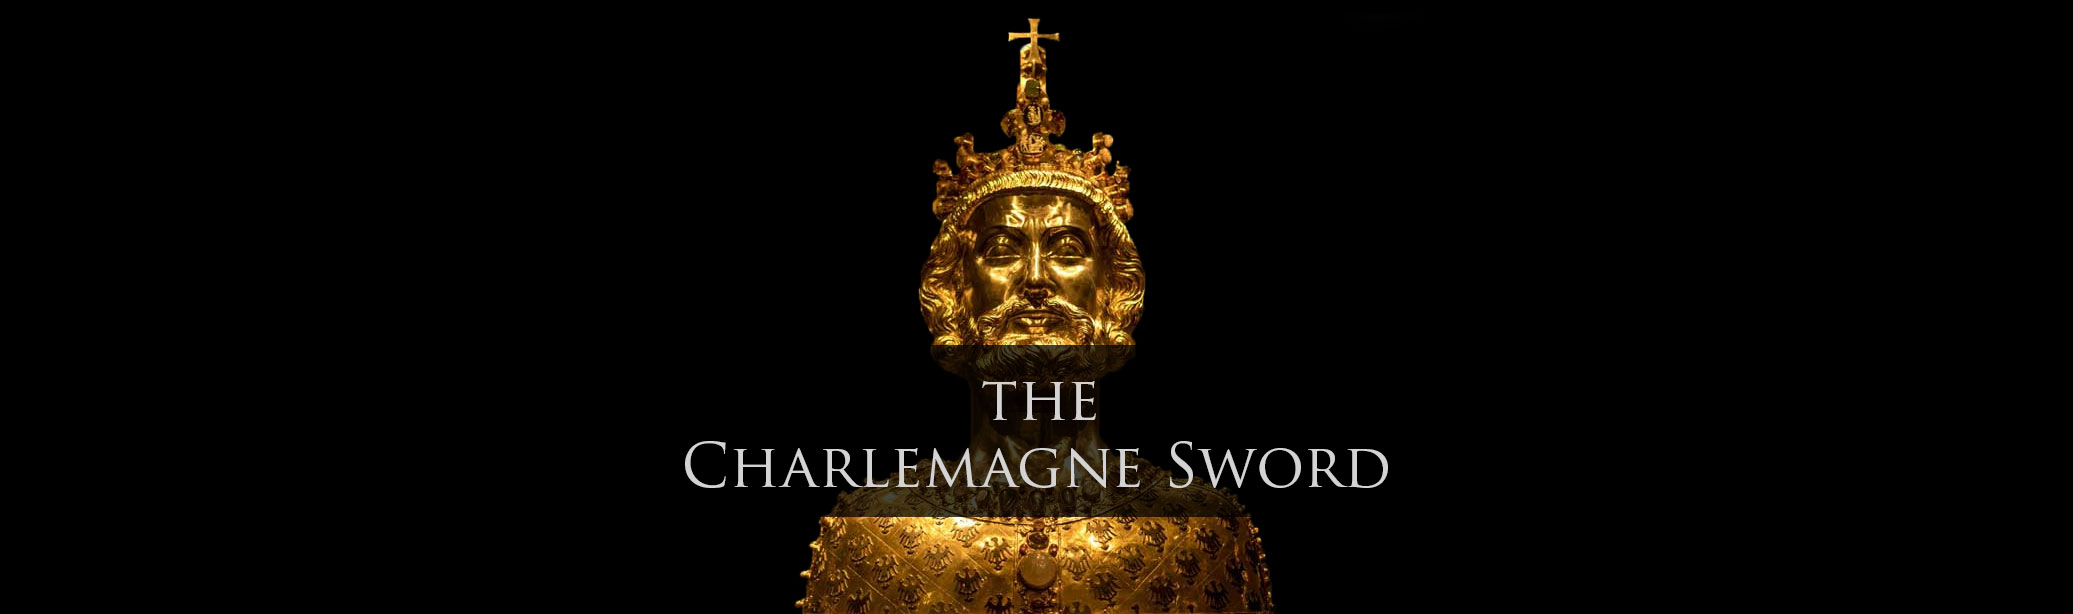 the-charlemagne-sword-banner-3